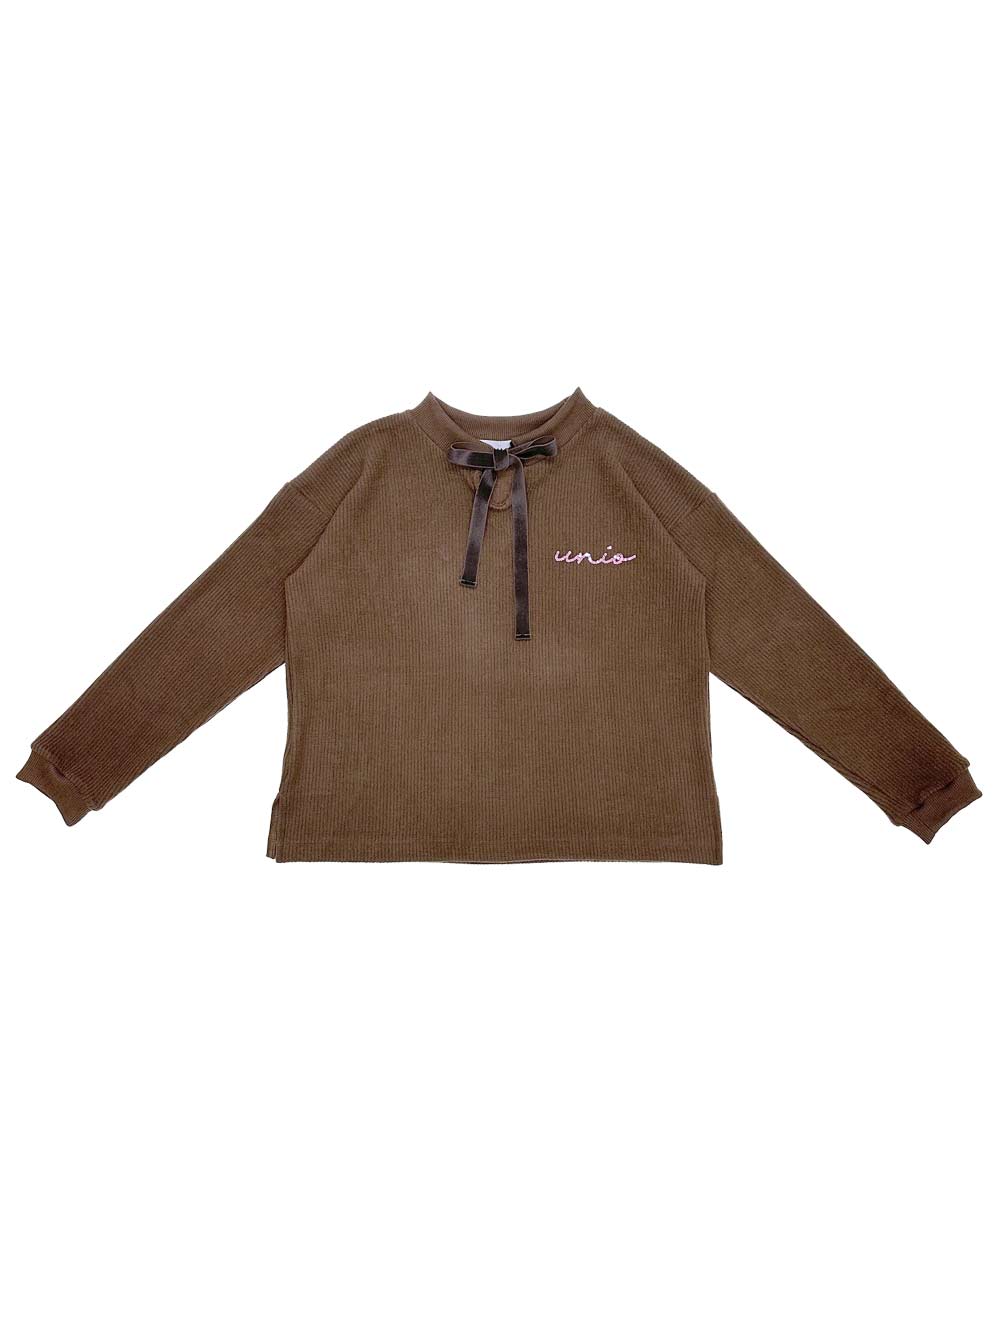 PREORDER: Ribbon Collar Brown Sweater